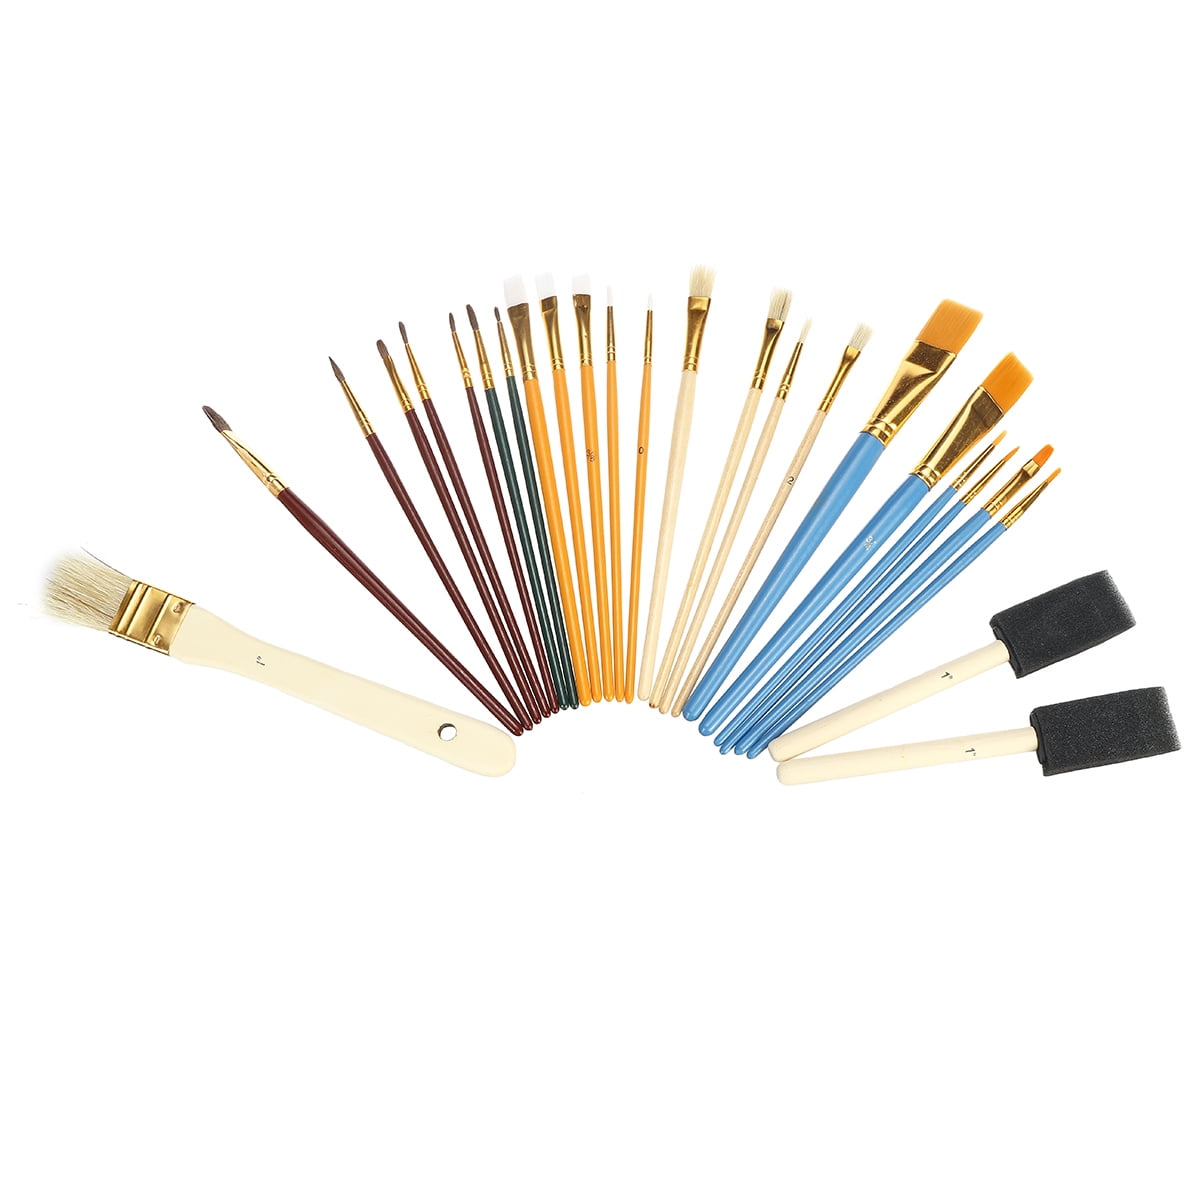 Professional Artist Paint Brush Set Of 25 Painting Brushes Kit For